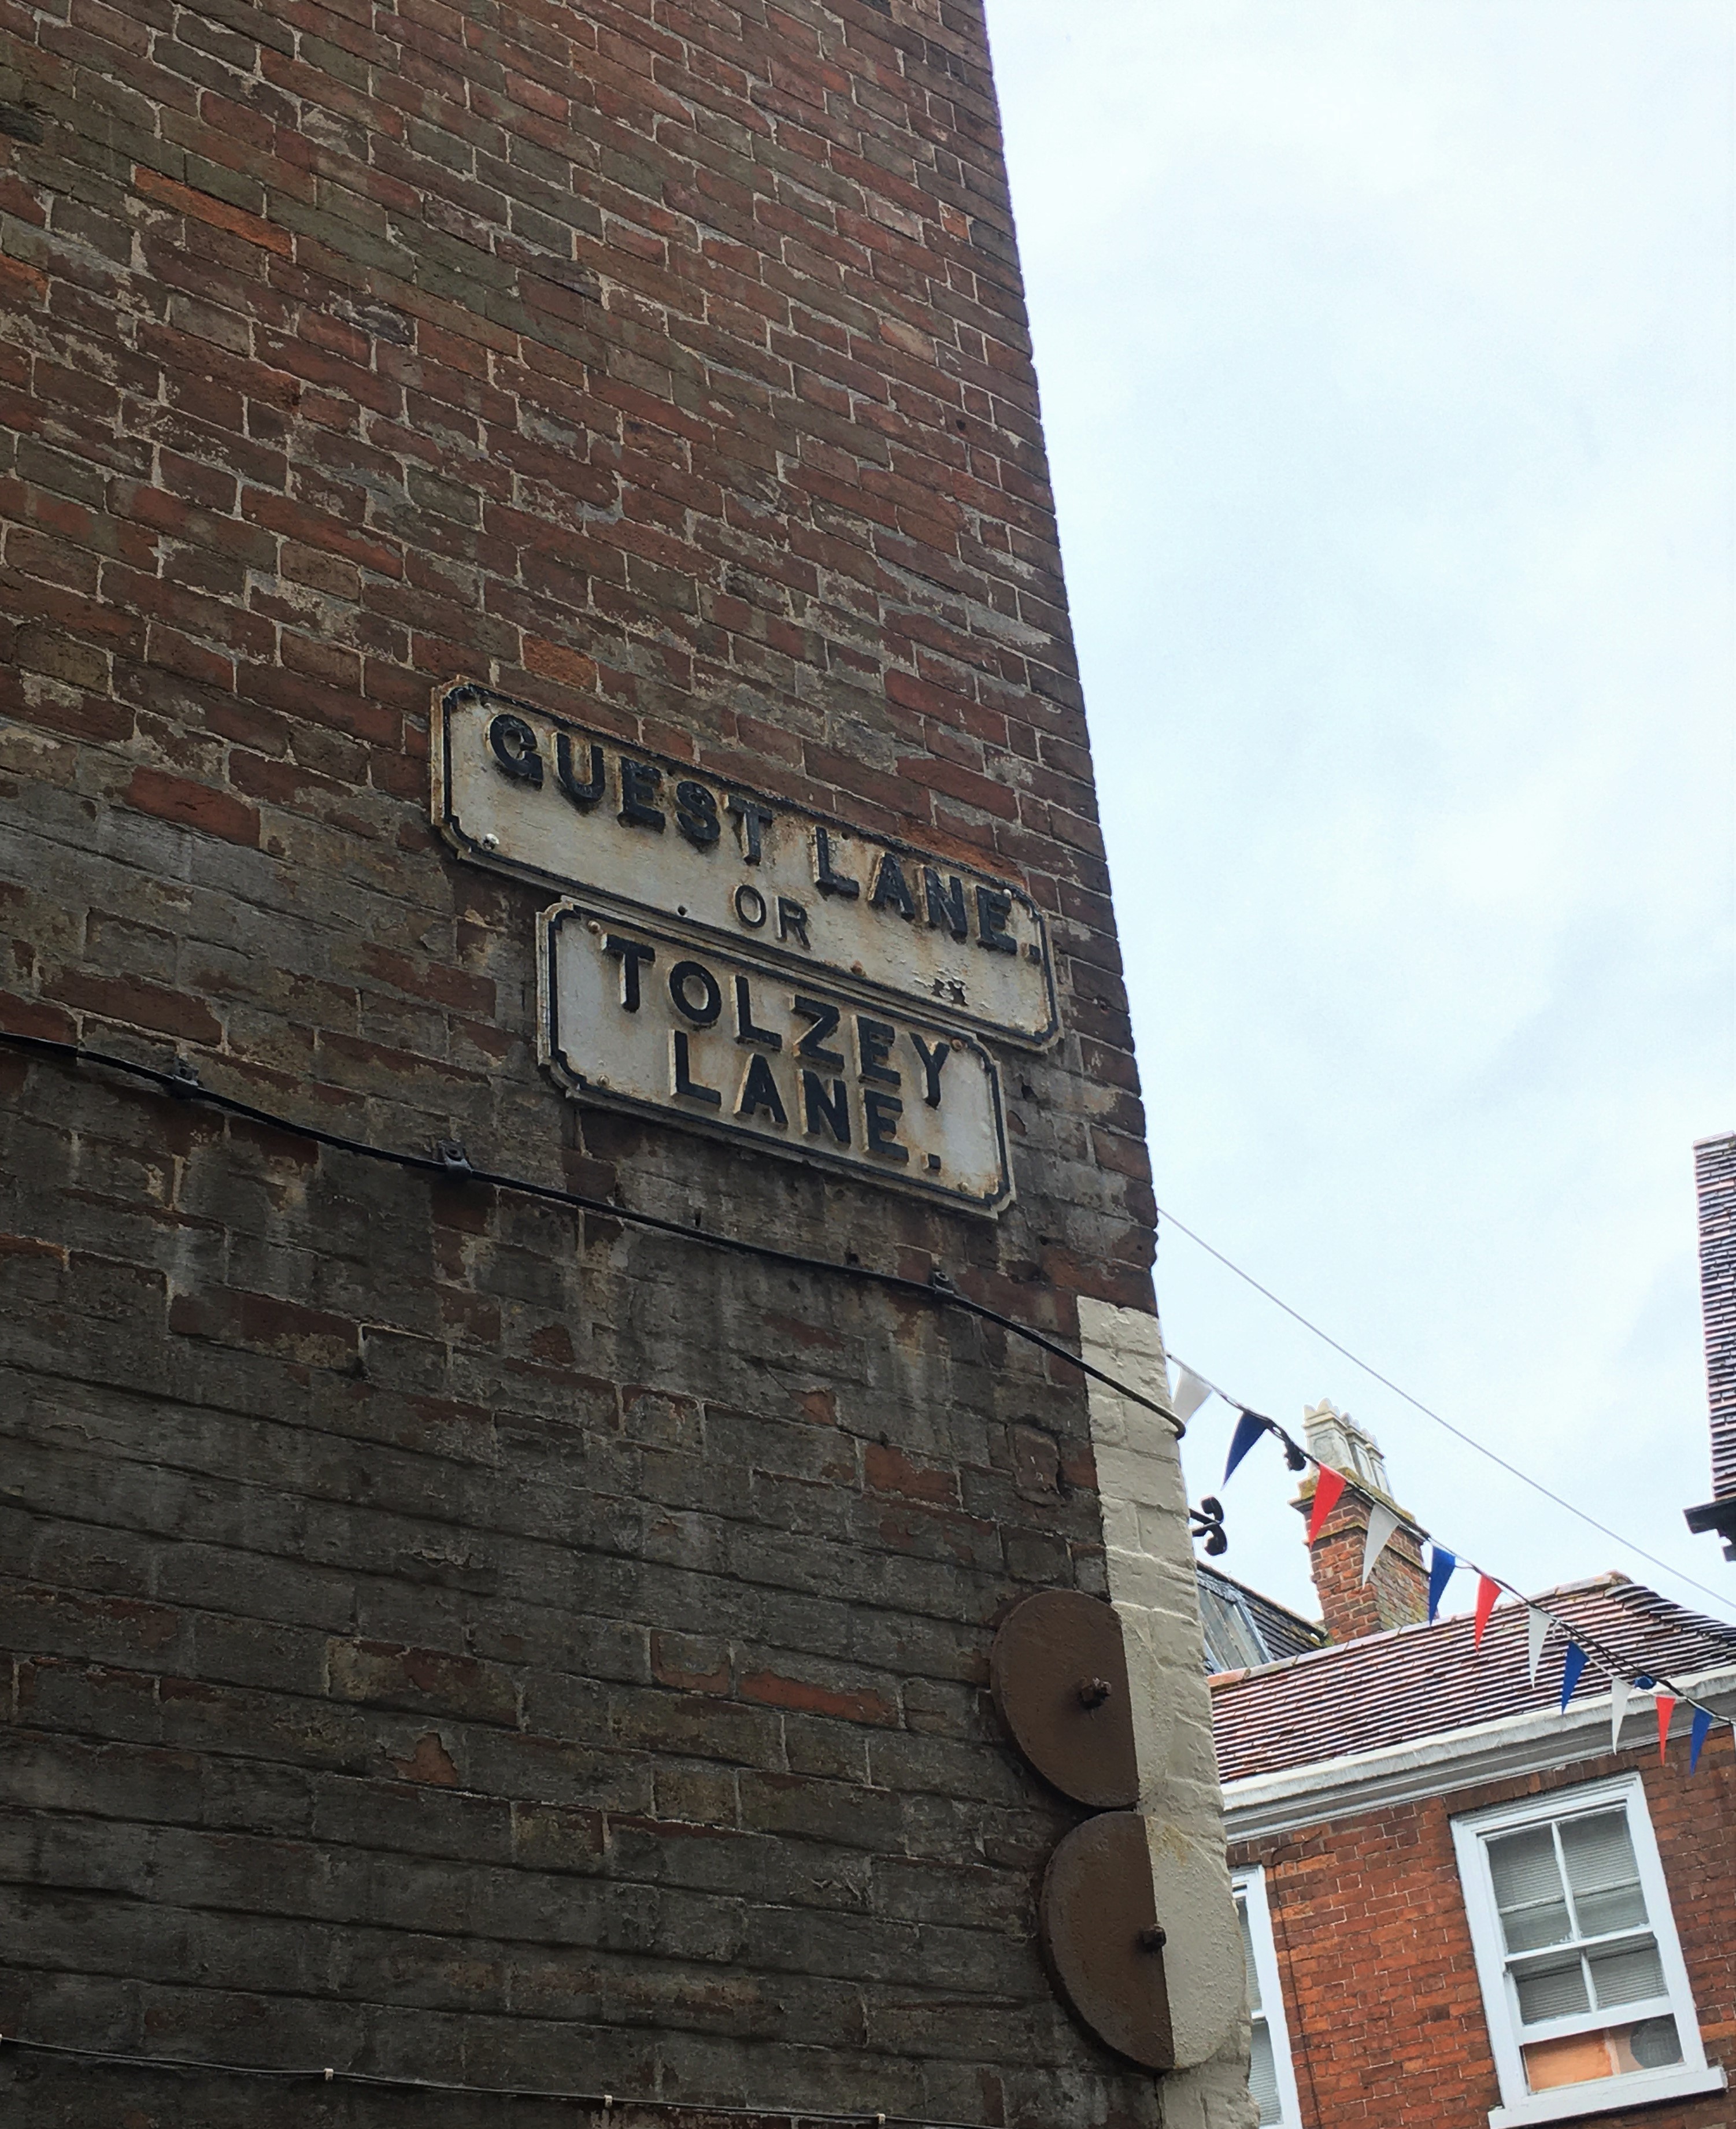 Strange and supernatural goings on in Tolsey Lane, Tewkesbury